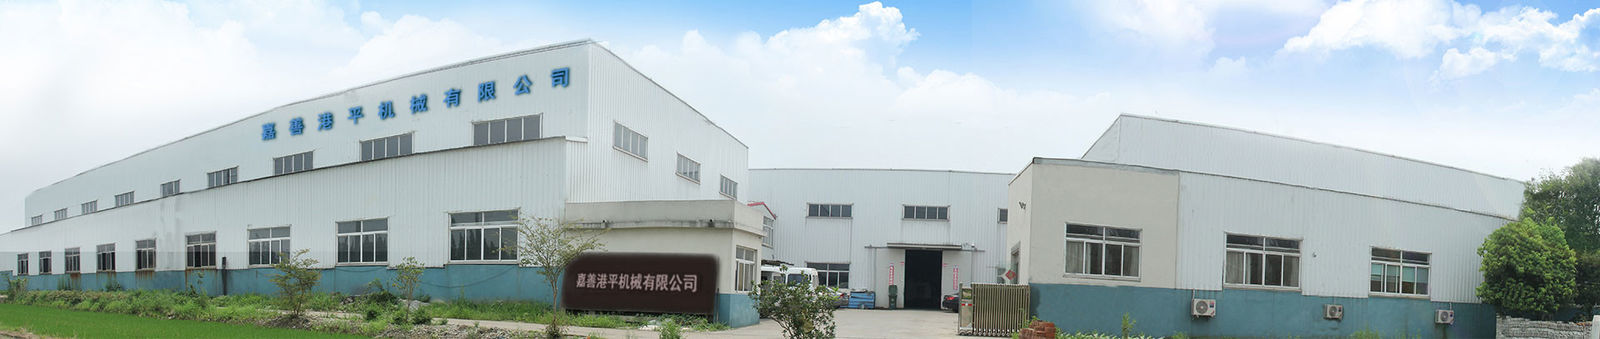 Chiny Jiashan Gangping Machinery Co., Ltd. profil firmy